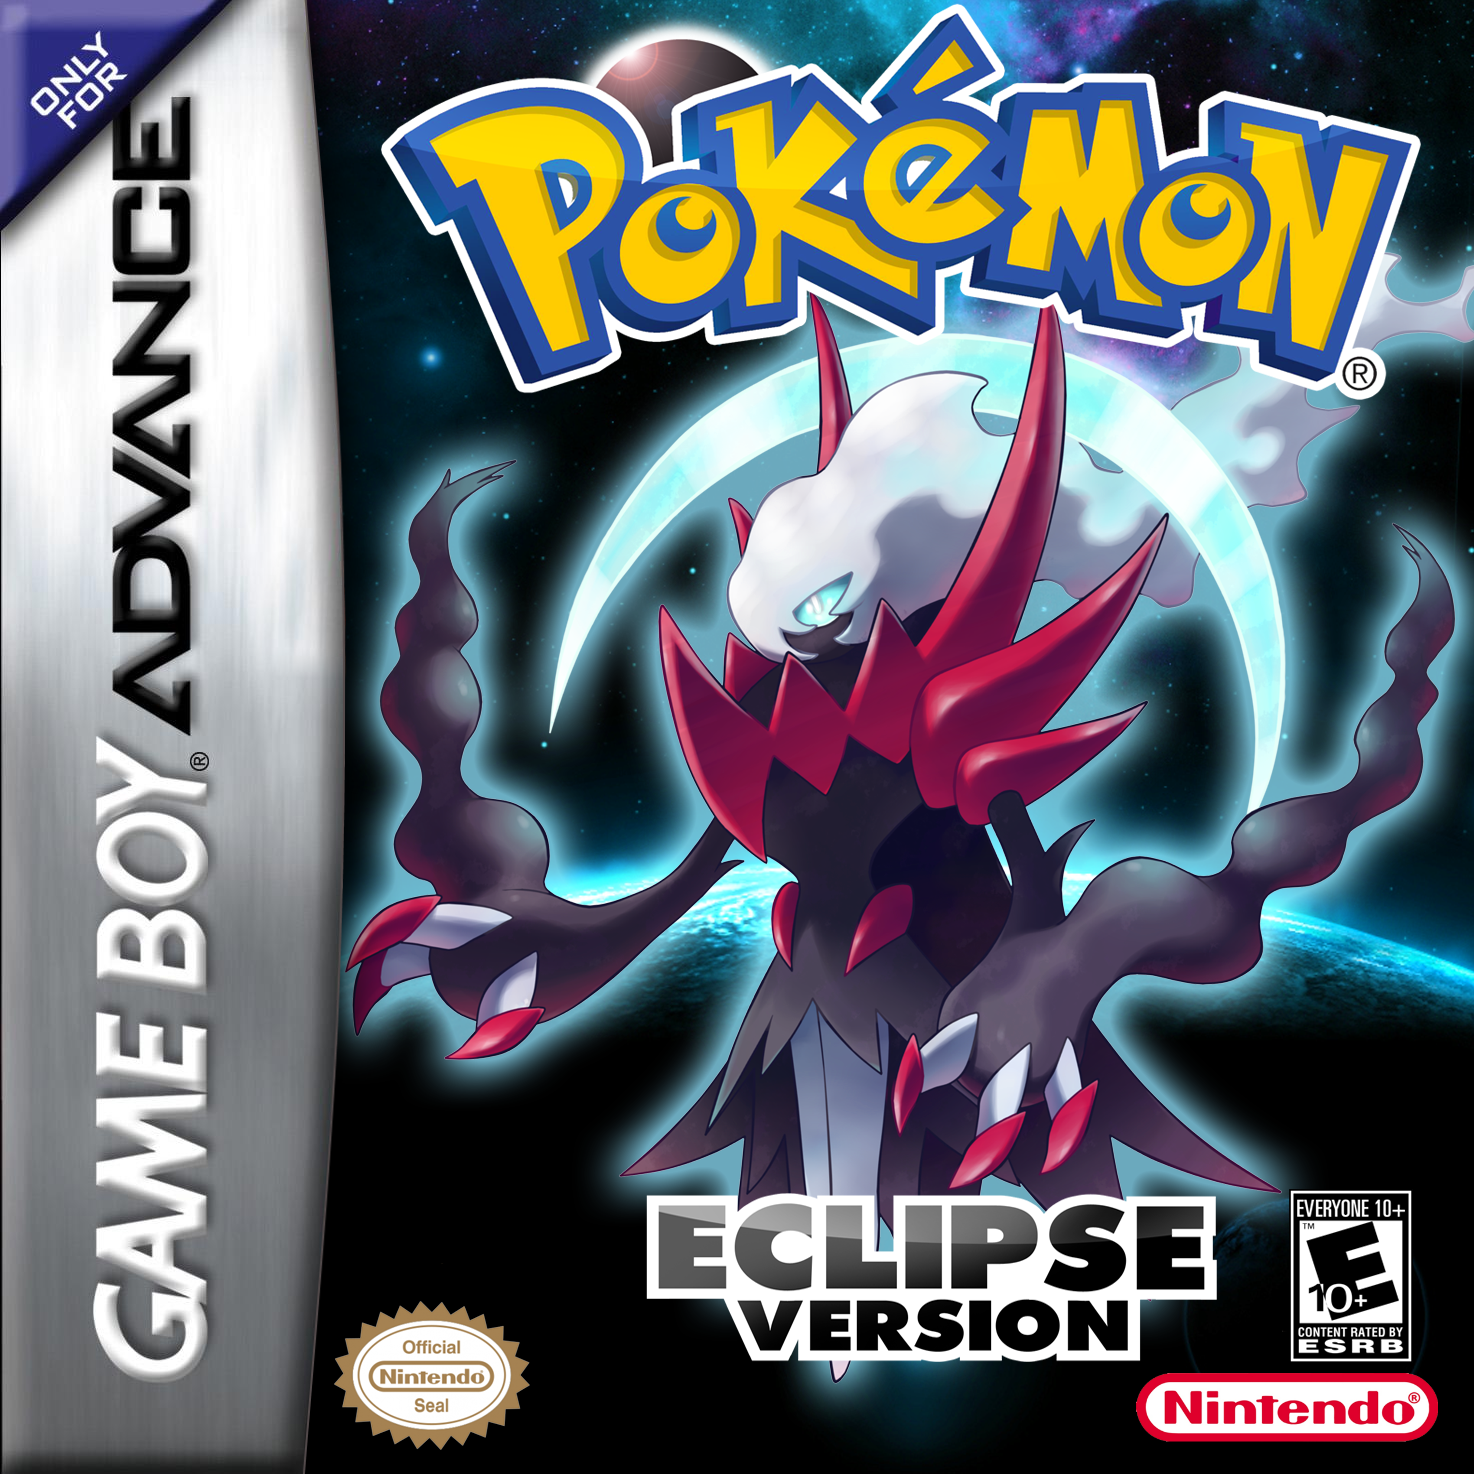 Pókemon Eclipse box cover